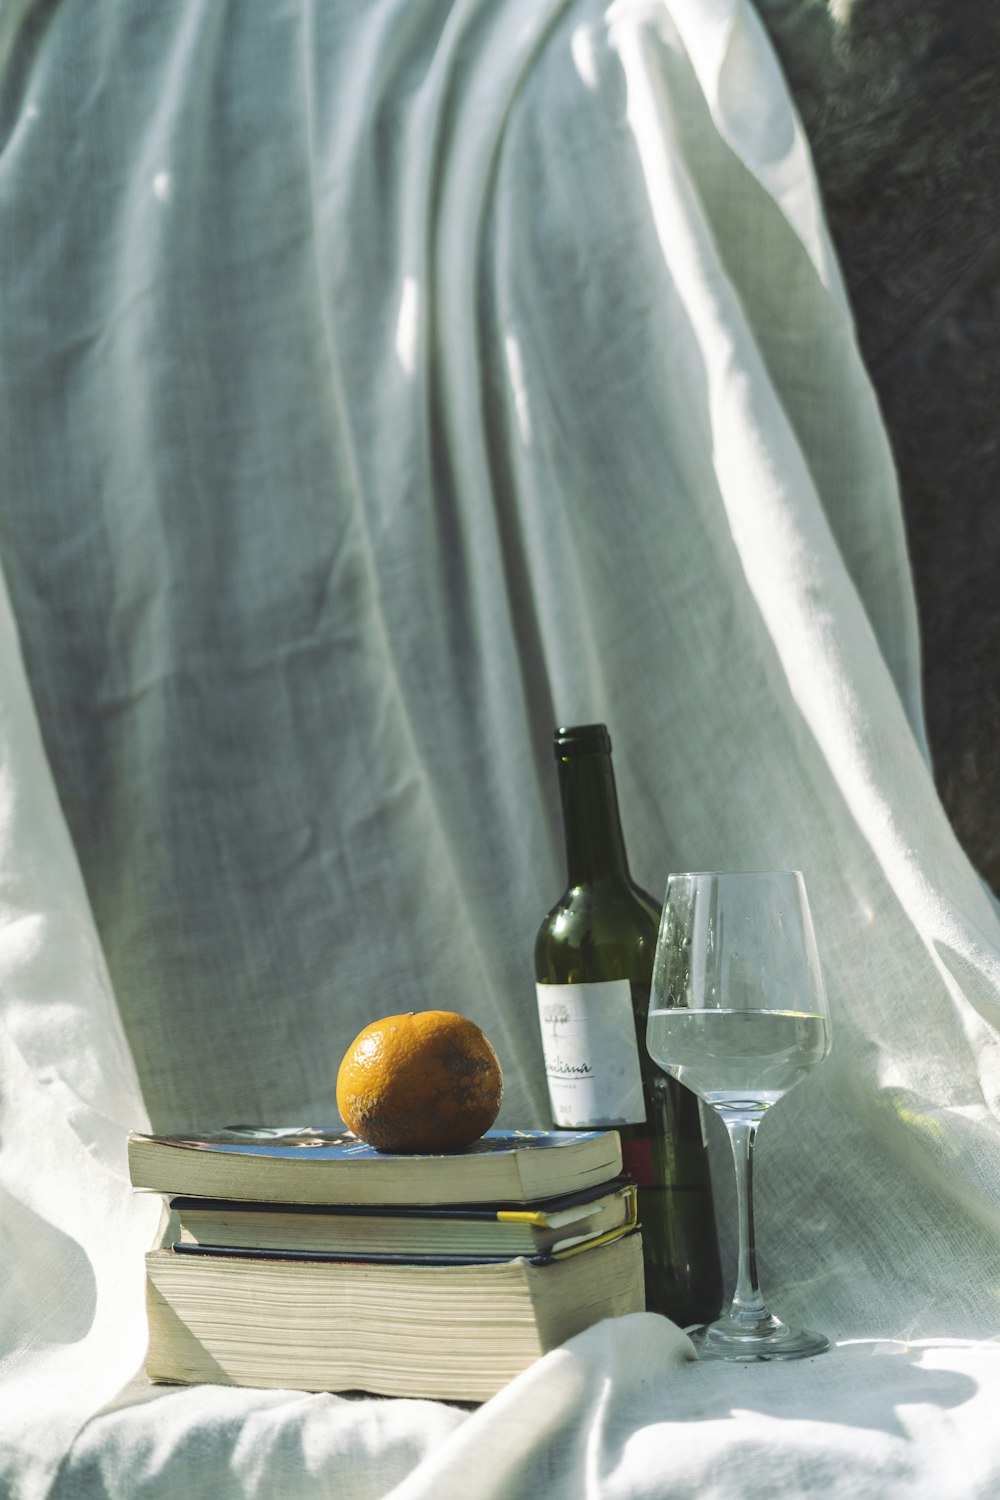 orange fruit beside wine bottle on table